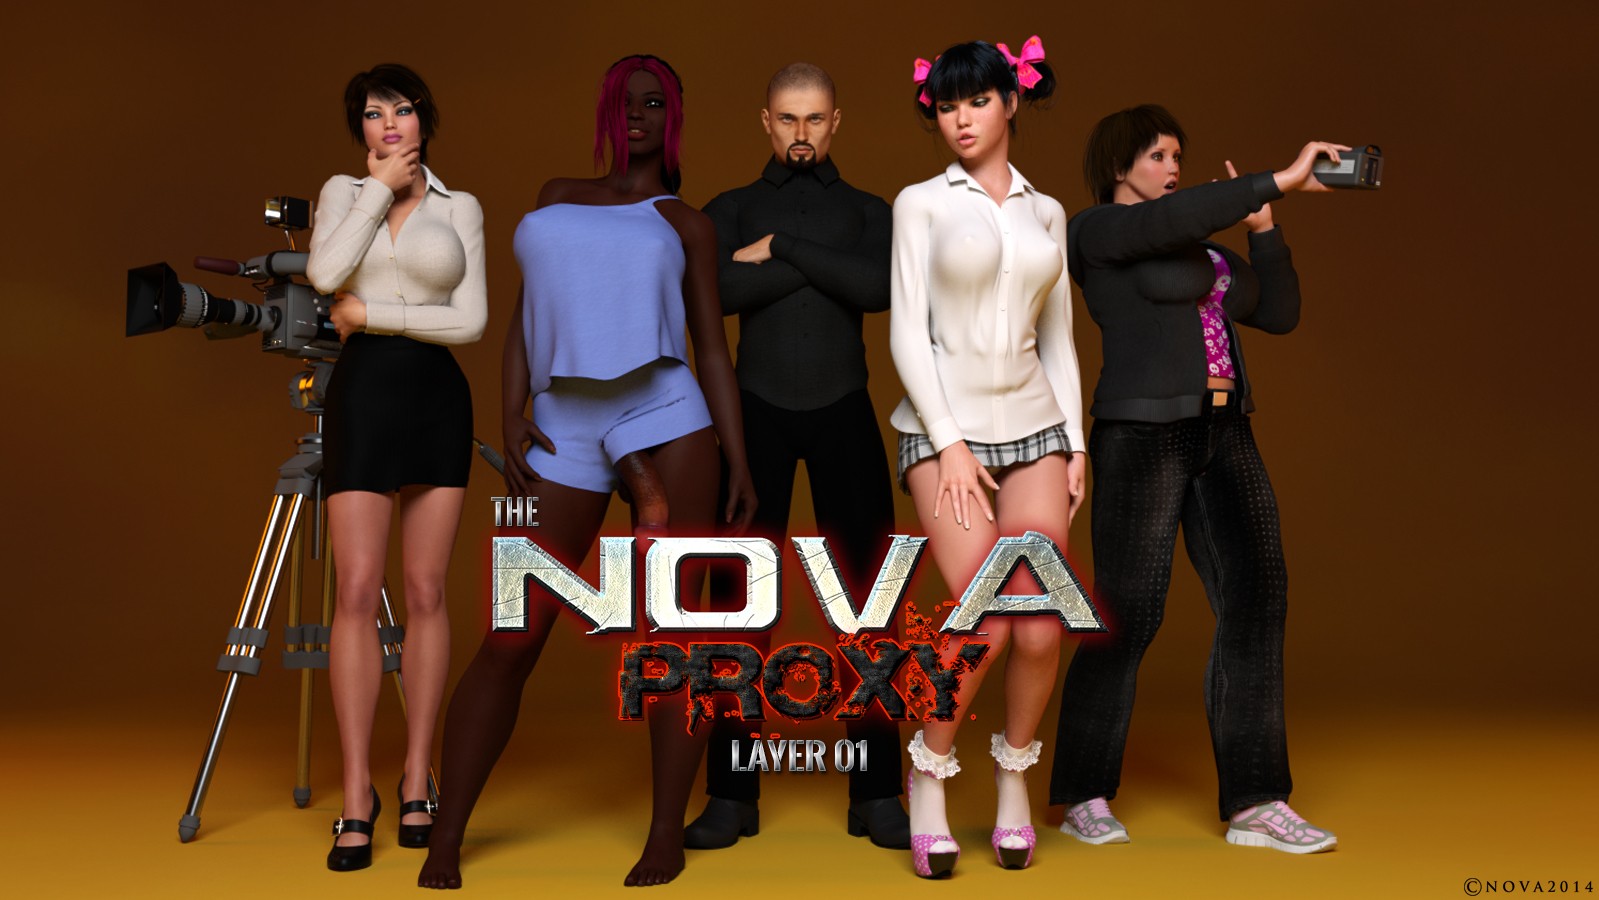 The Nova Proxy - Layer